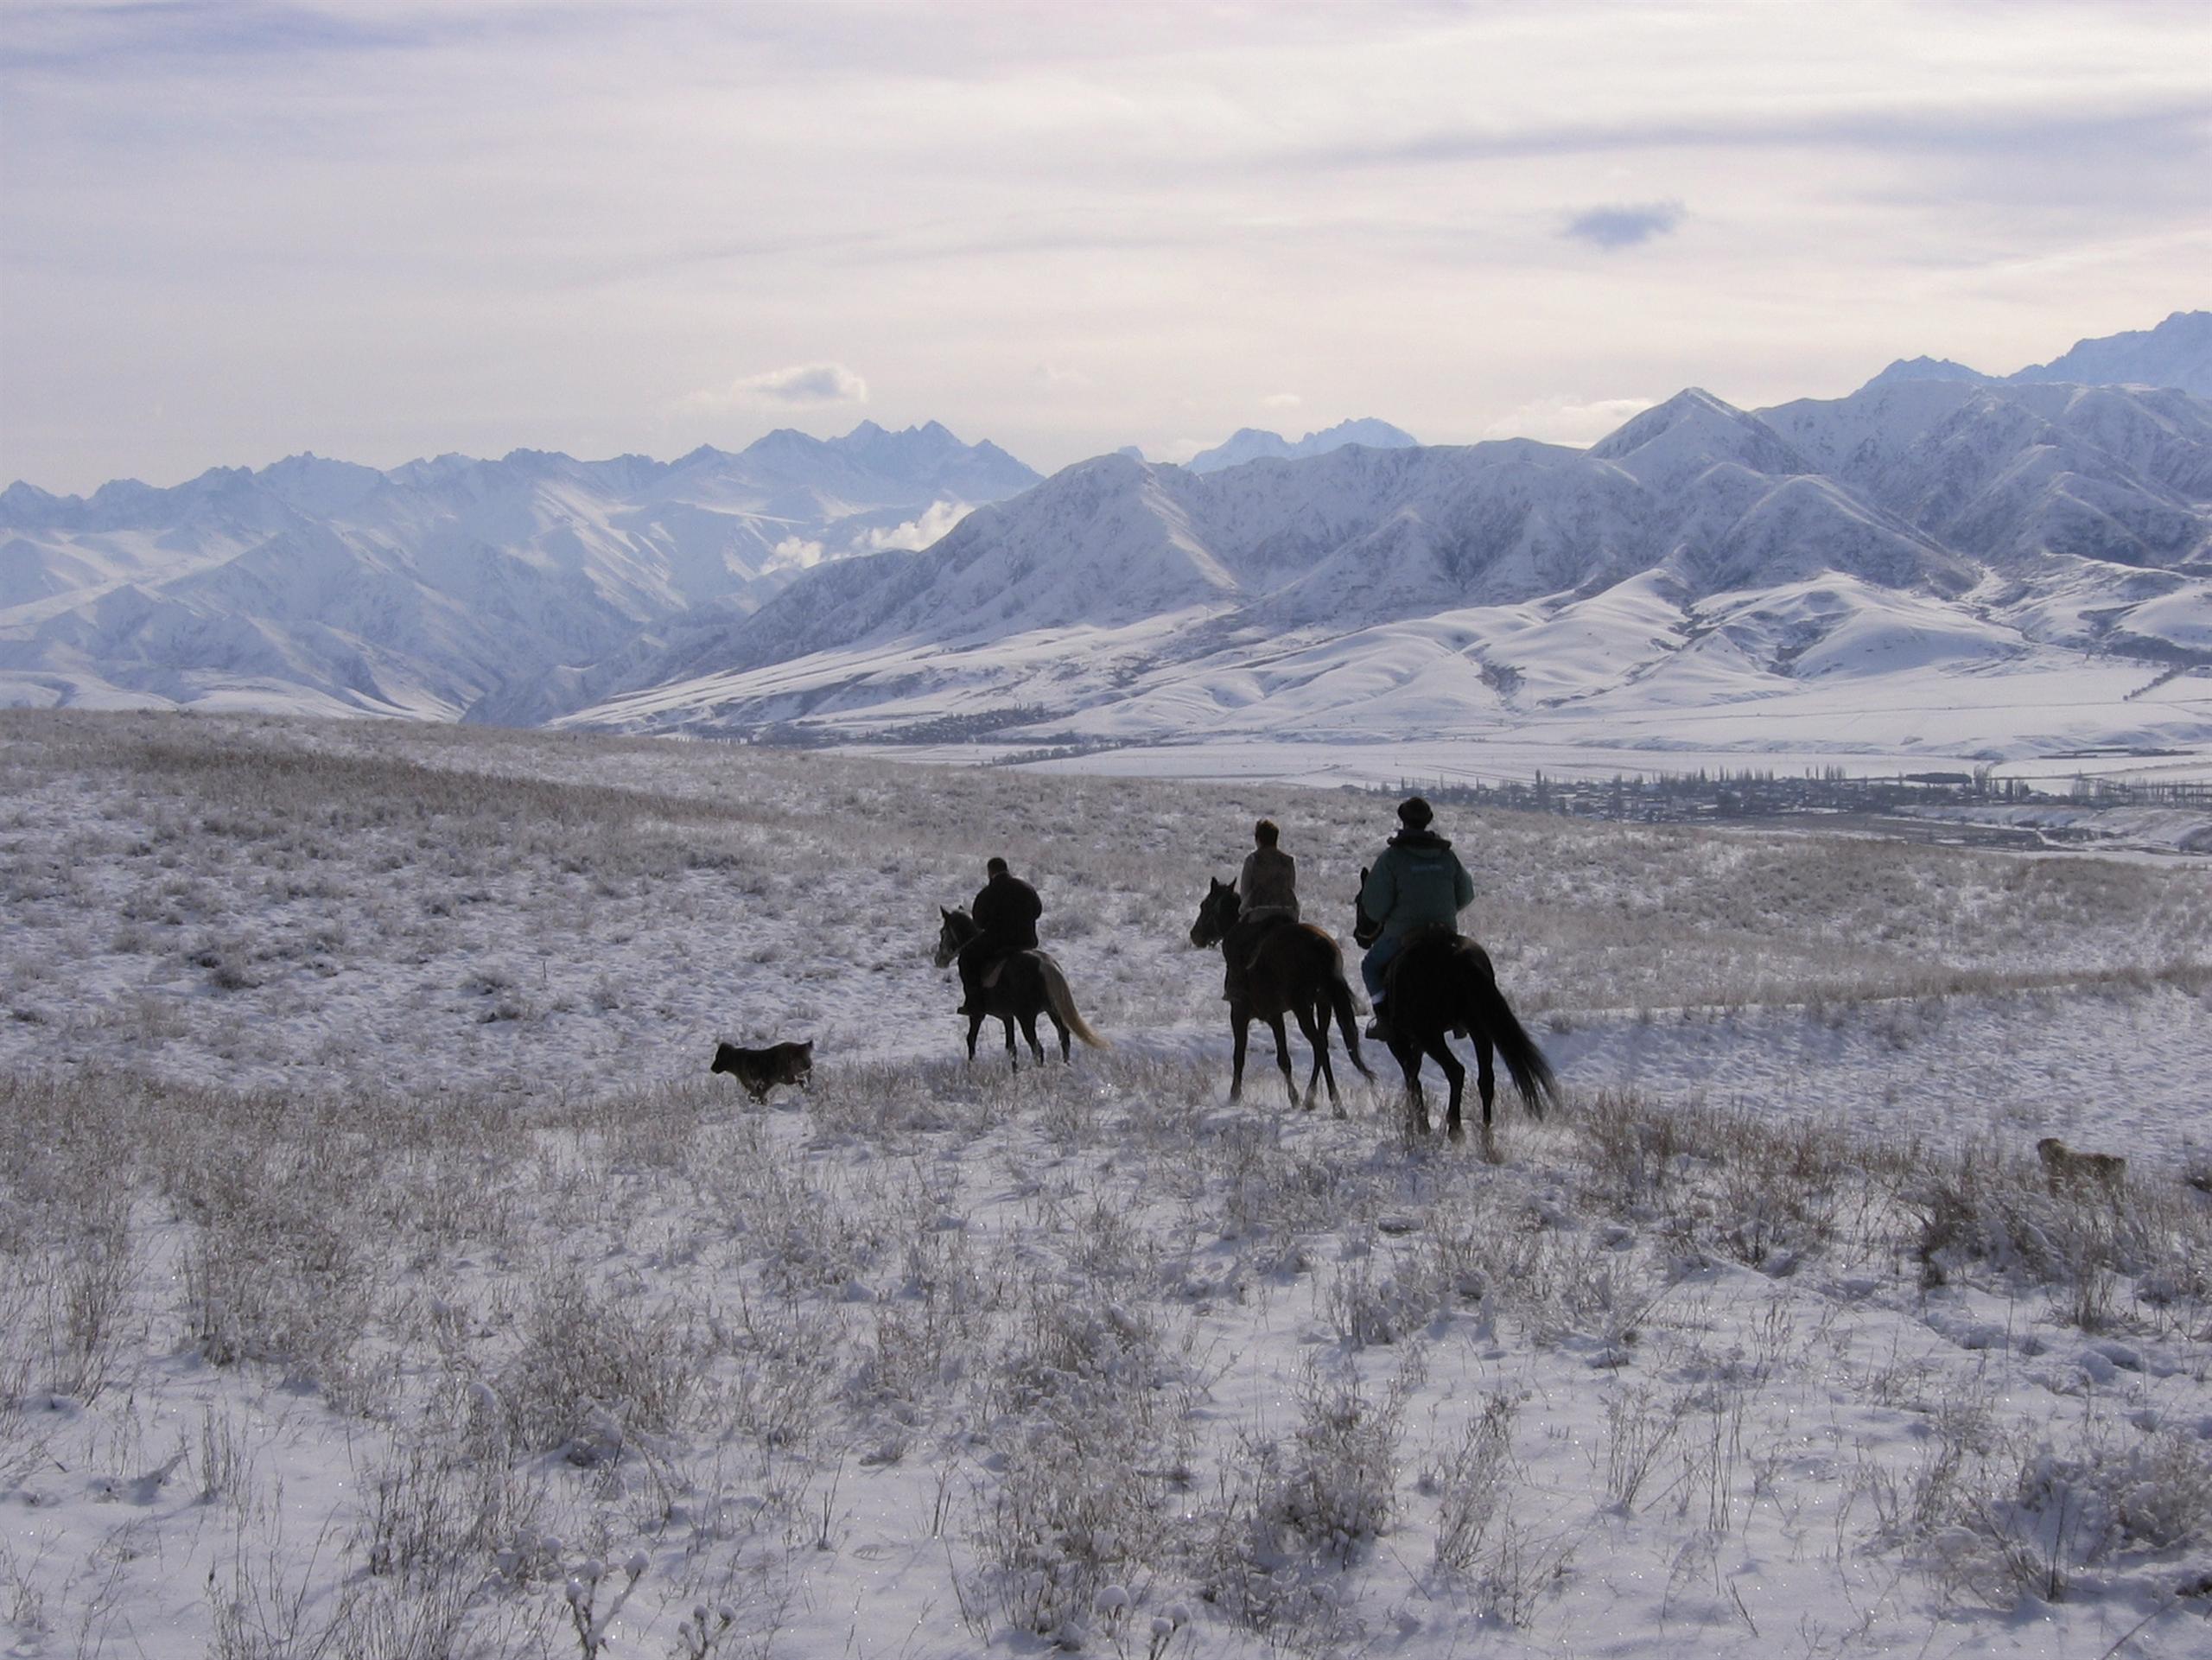 Men riding horses through snowy mountains